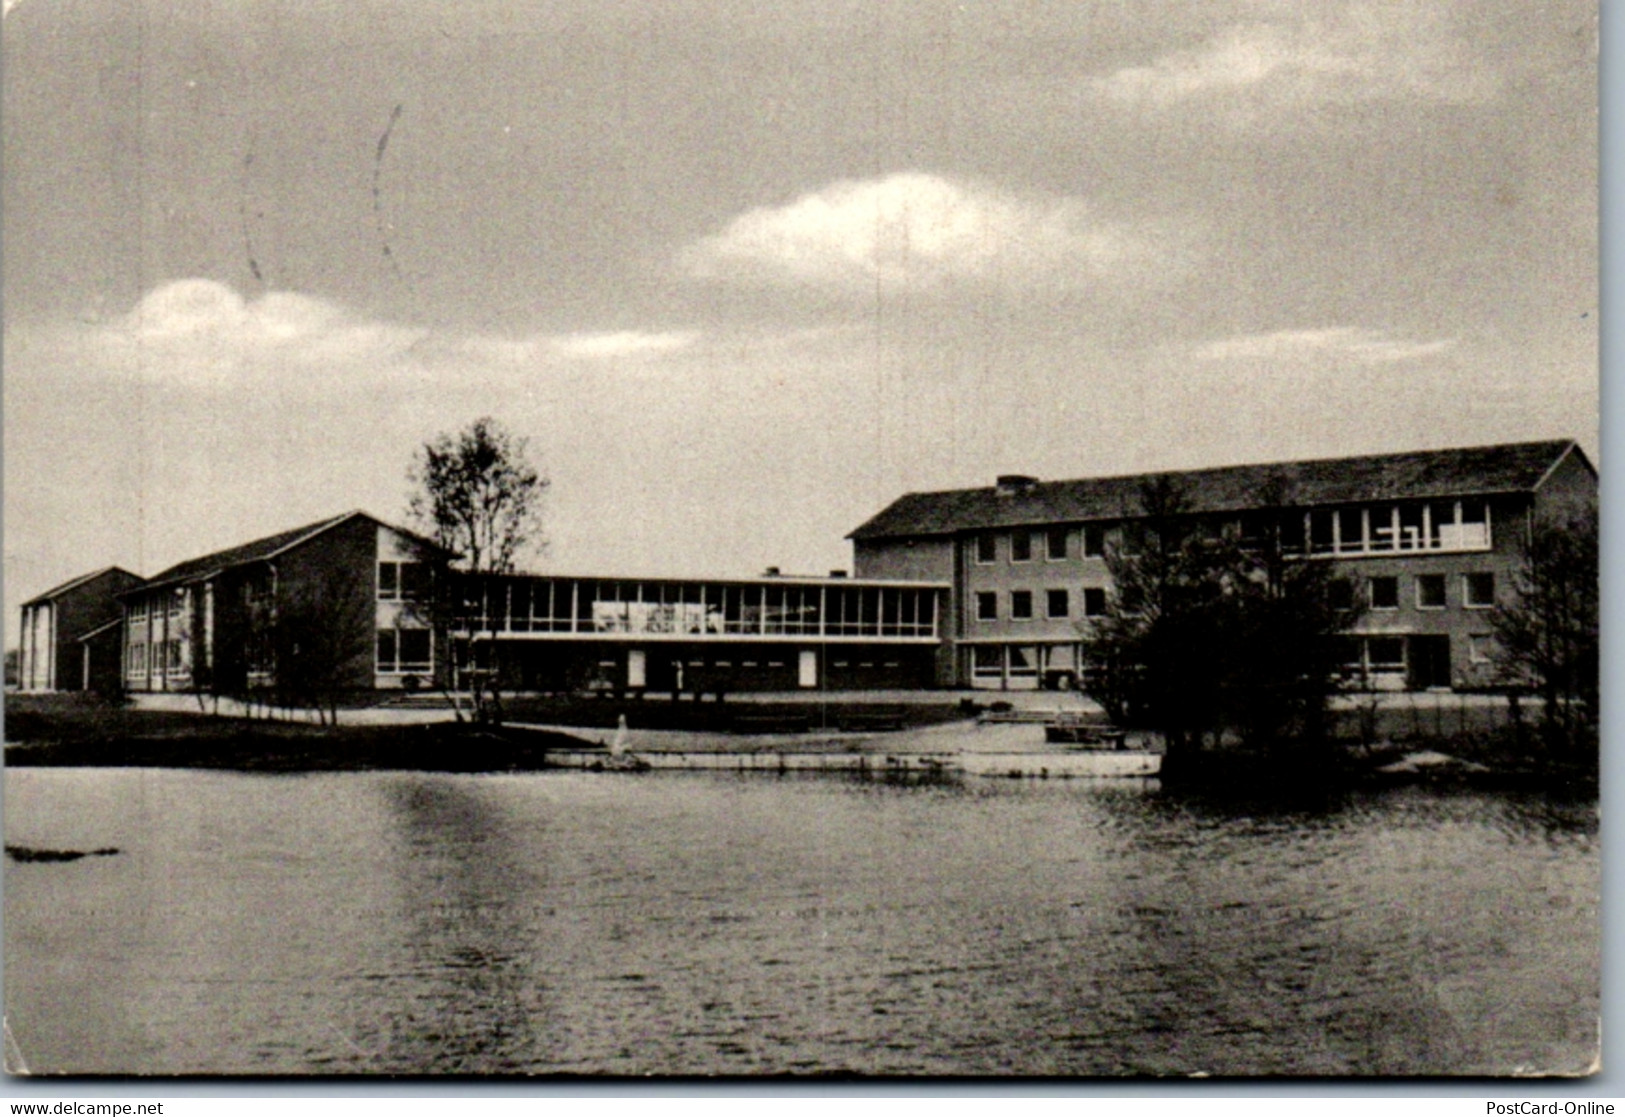 10478 - Deutschland - Harksheide , Mittelschule , Schule - Gelaufen 1970 - Norderstedt